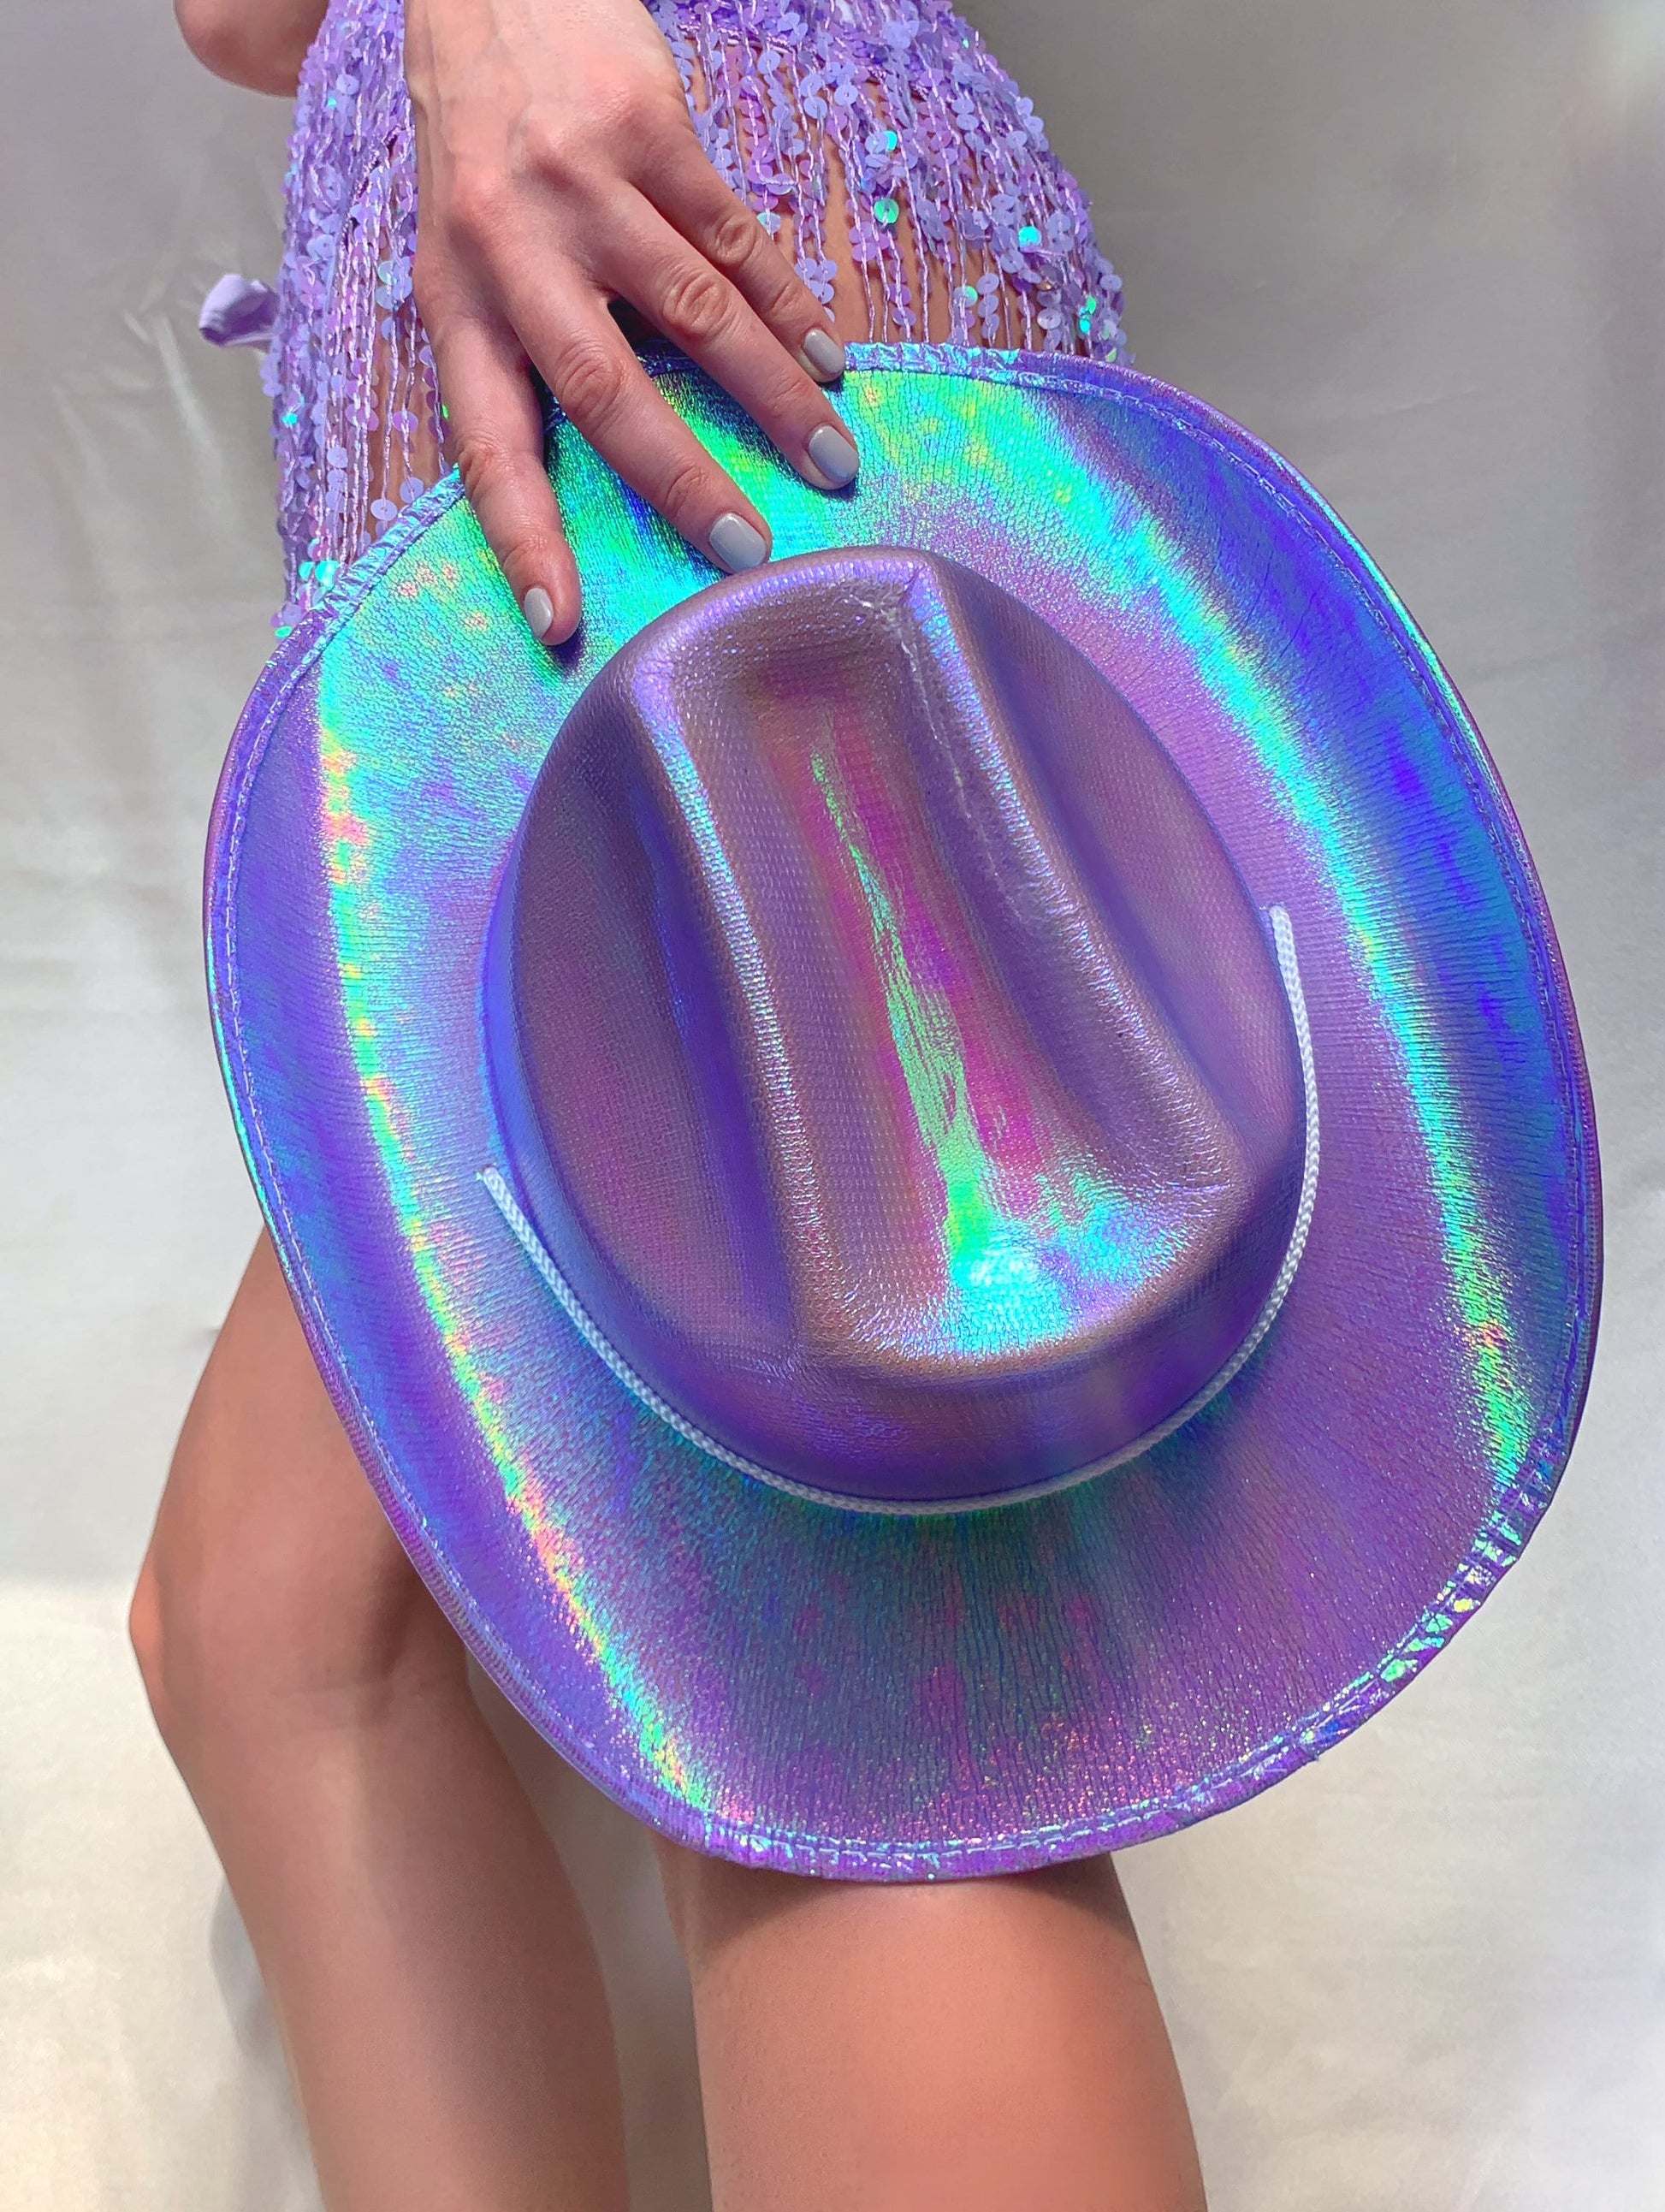 Holographic Cowboy Hat Bachelorette Party Favors | Purple Cowboy Hat | Pink Cowgirl Hat | White Bachelorette Party Outfit Ideas Gift